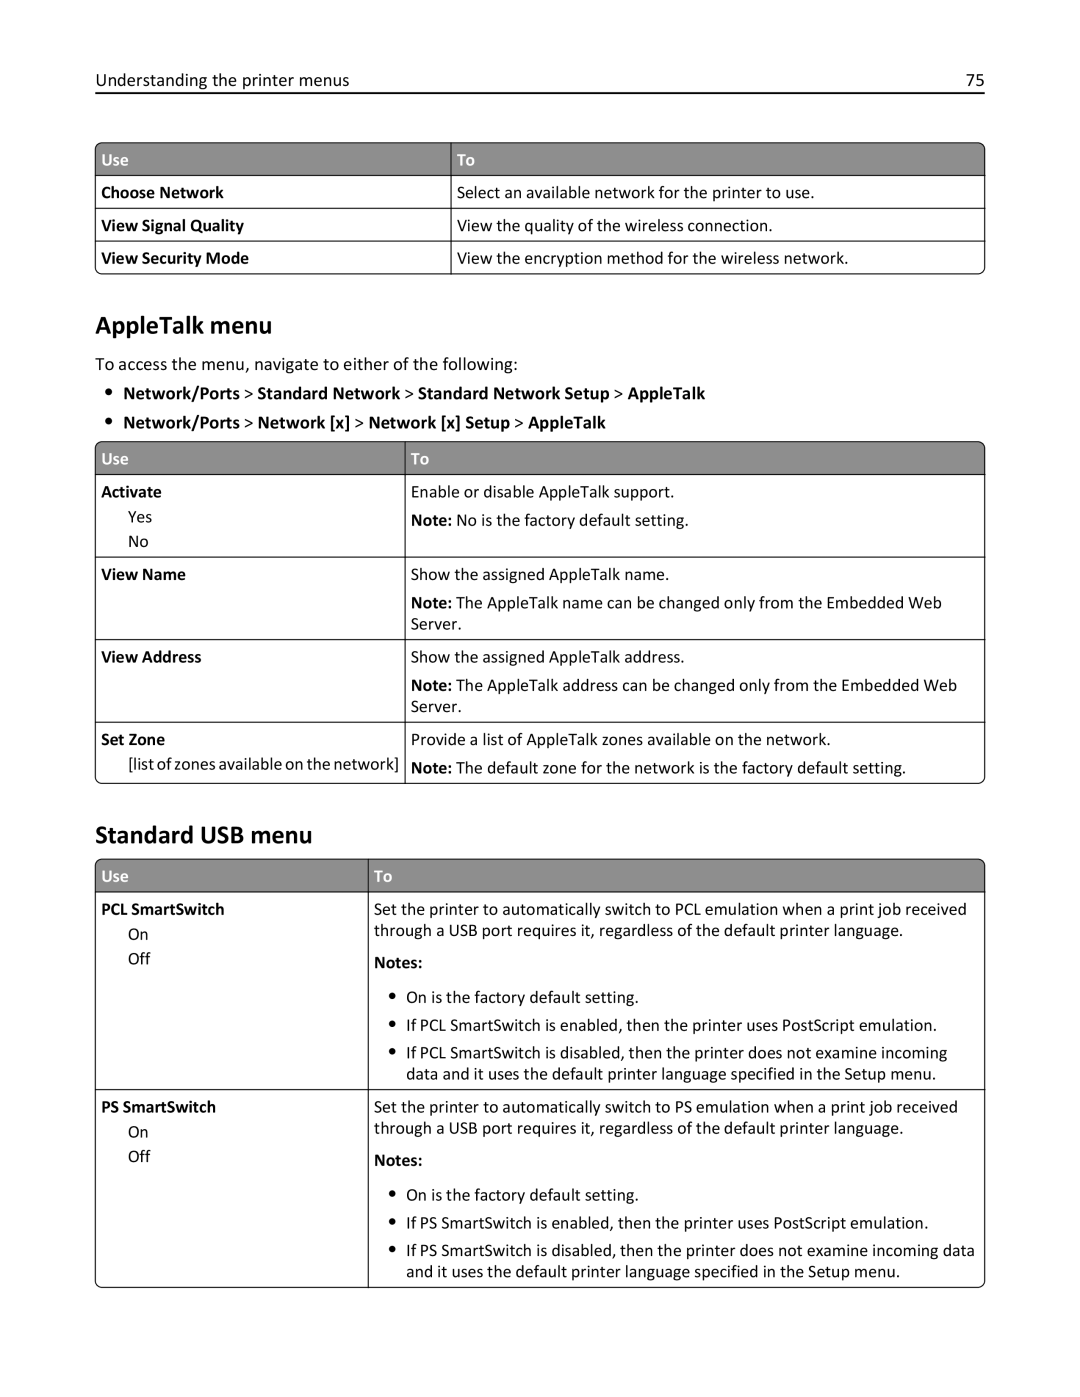 Lexmark CS410 manual AppleTalk menu, Standard USB menu, Understanding the printer menus 